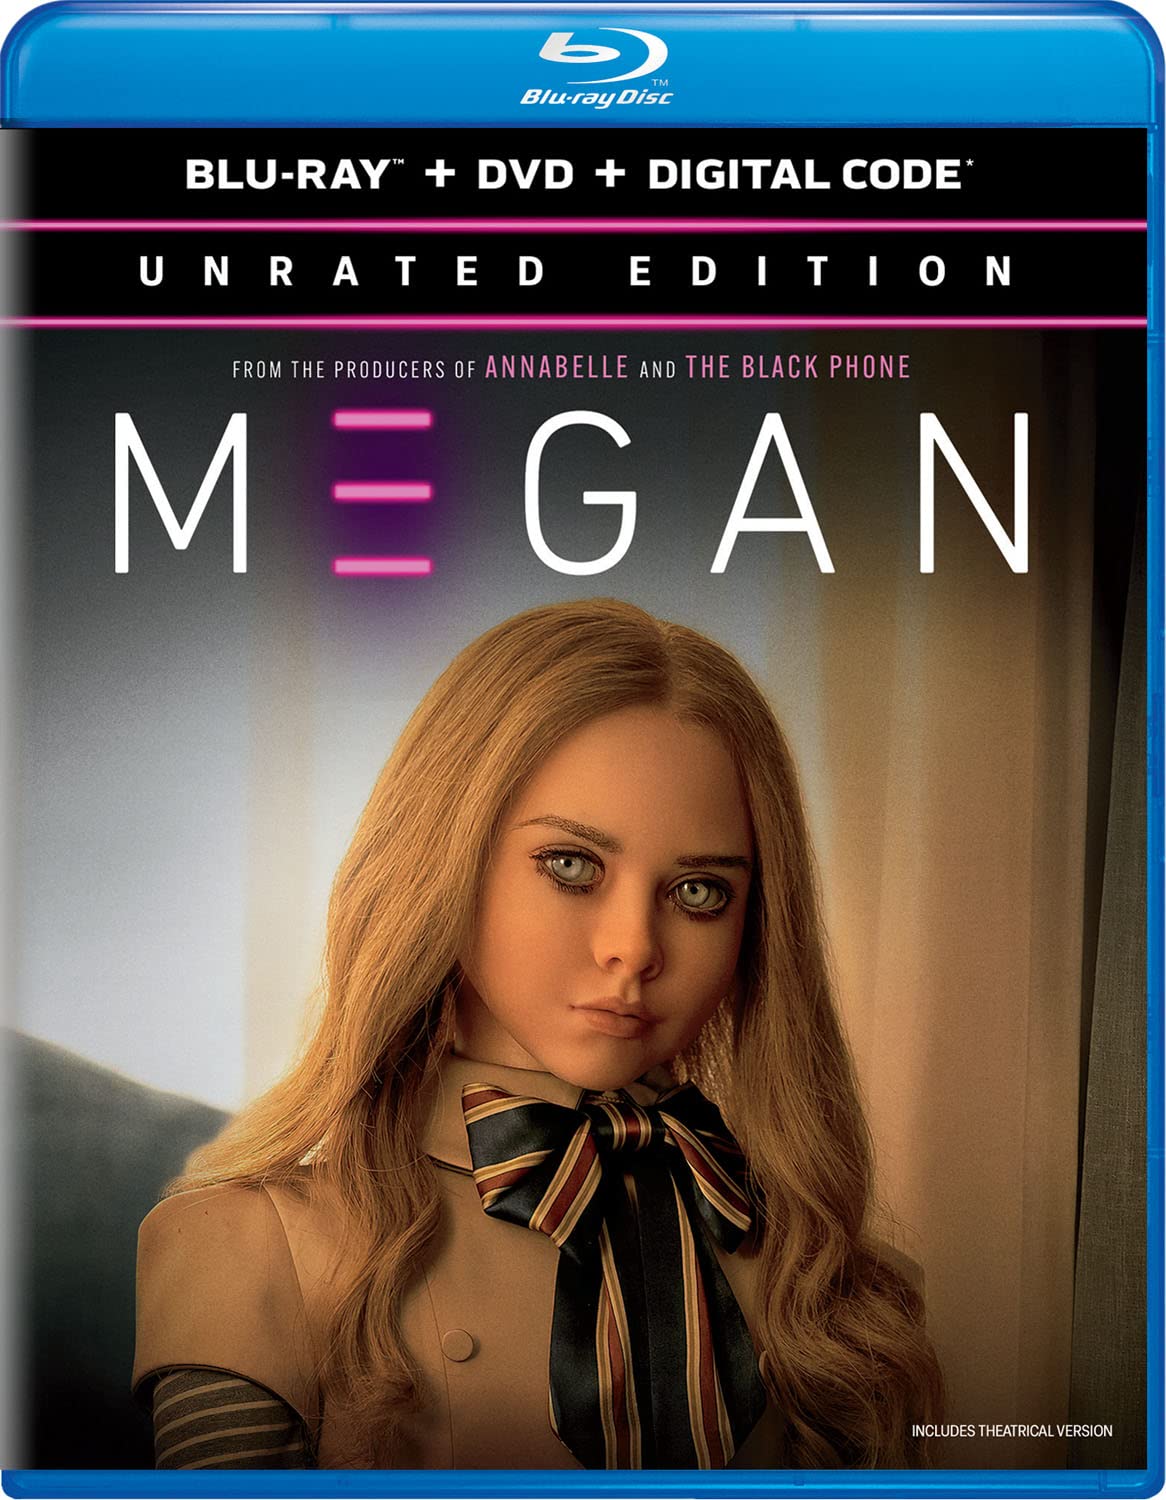 M3GAN (Blu-ray + DVD + Digital Code) $8 + Free Shipping w/ Prime or on $35+